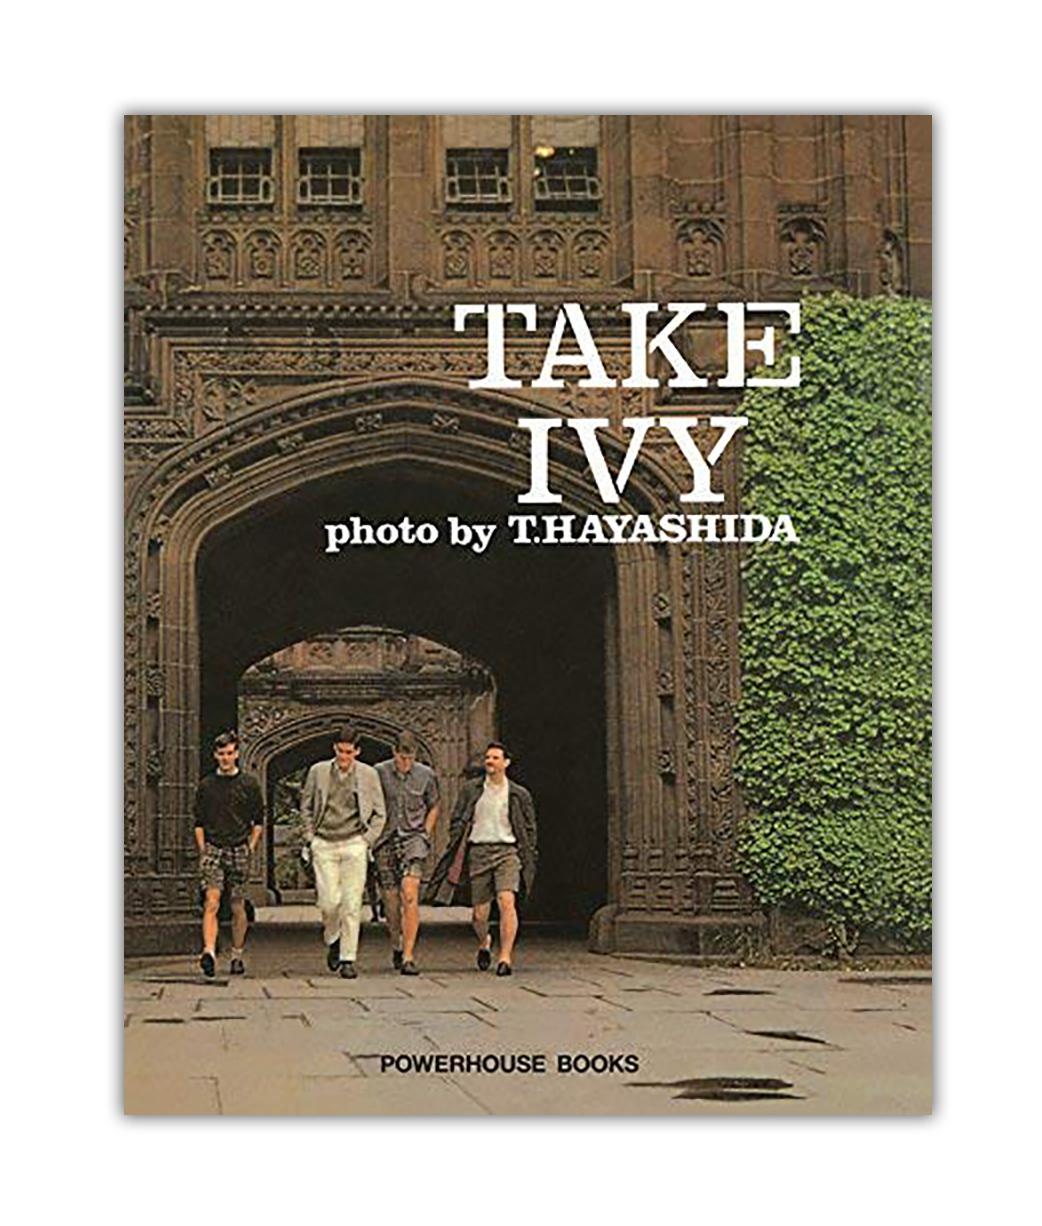 Take Ivy - hardcover; new; unopened; 2010 reprint edition from 1965 original - Photograph by Teruyoshi Hayashida